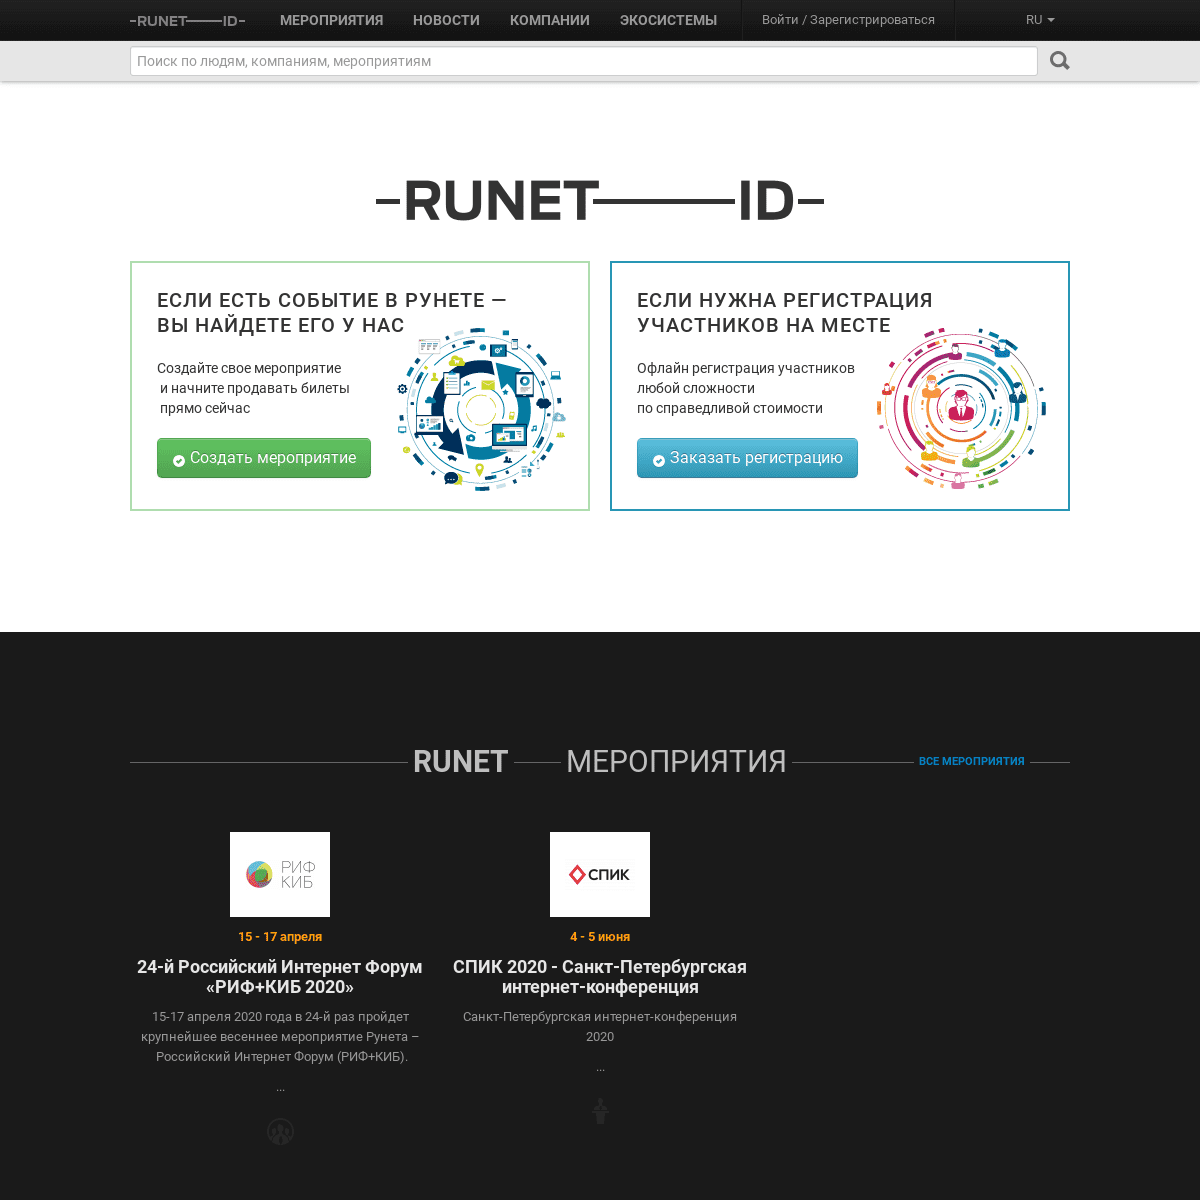 A complete backup of runet-id.com